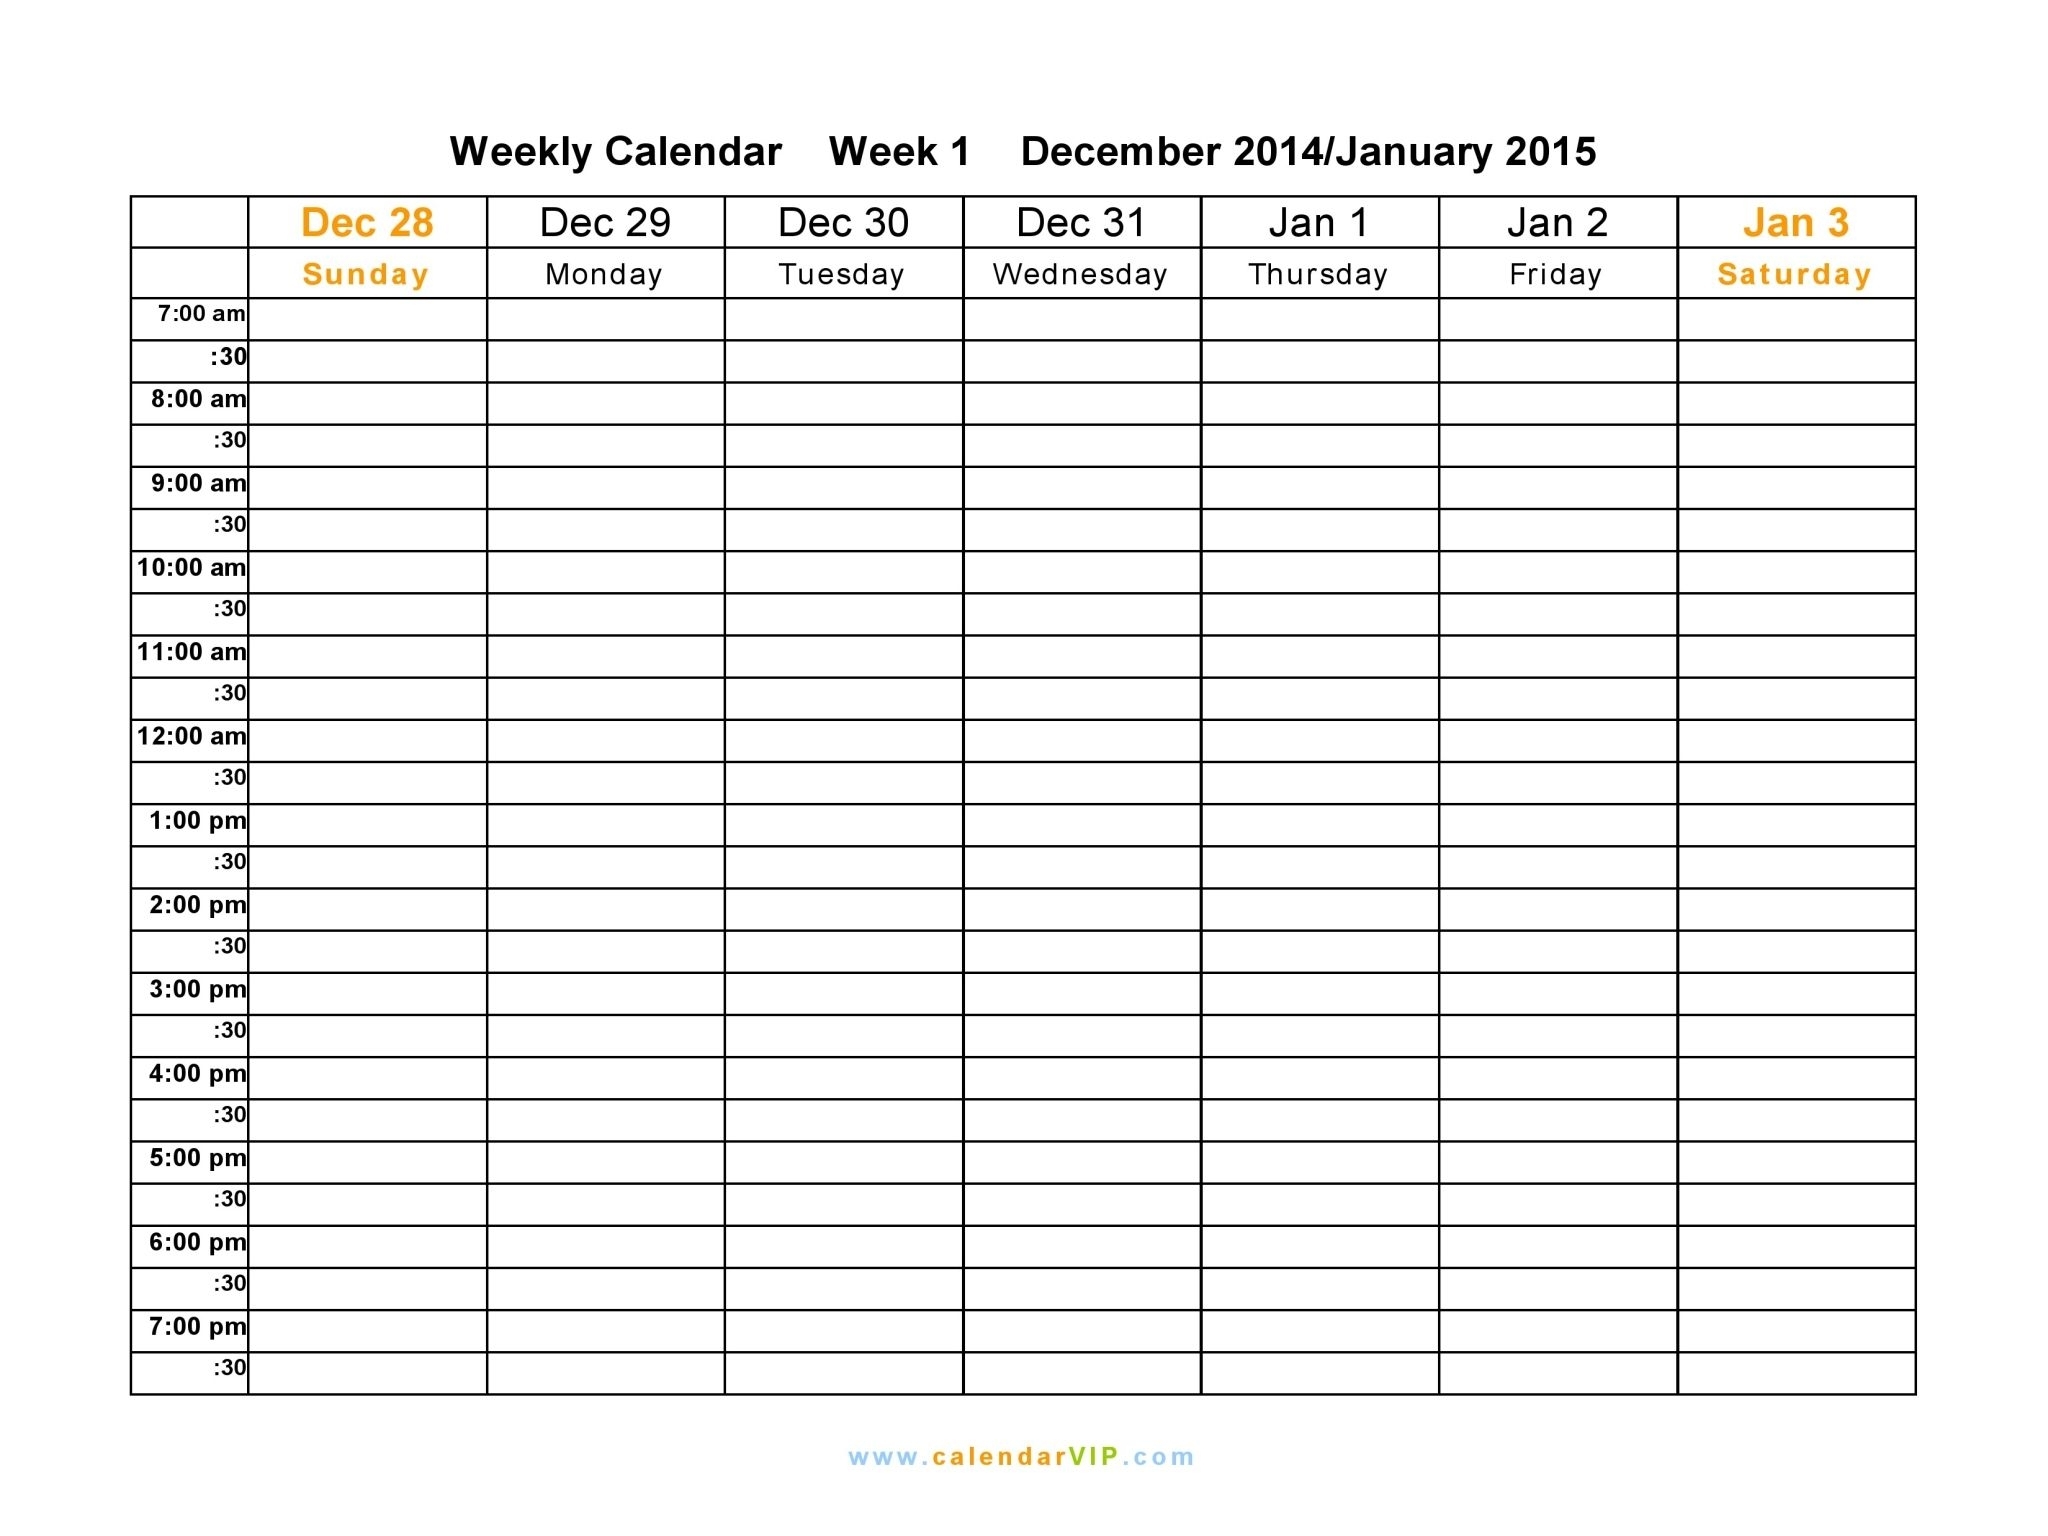 Free Printable Weekly Calendar Templates 2015 | Swe | Monthly with Free Printable Weekly Calendar Templates